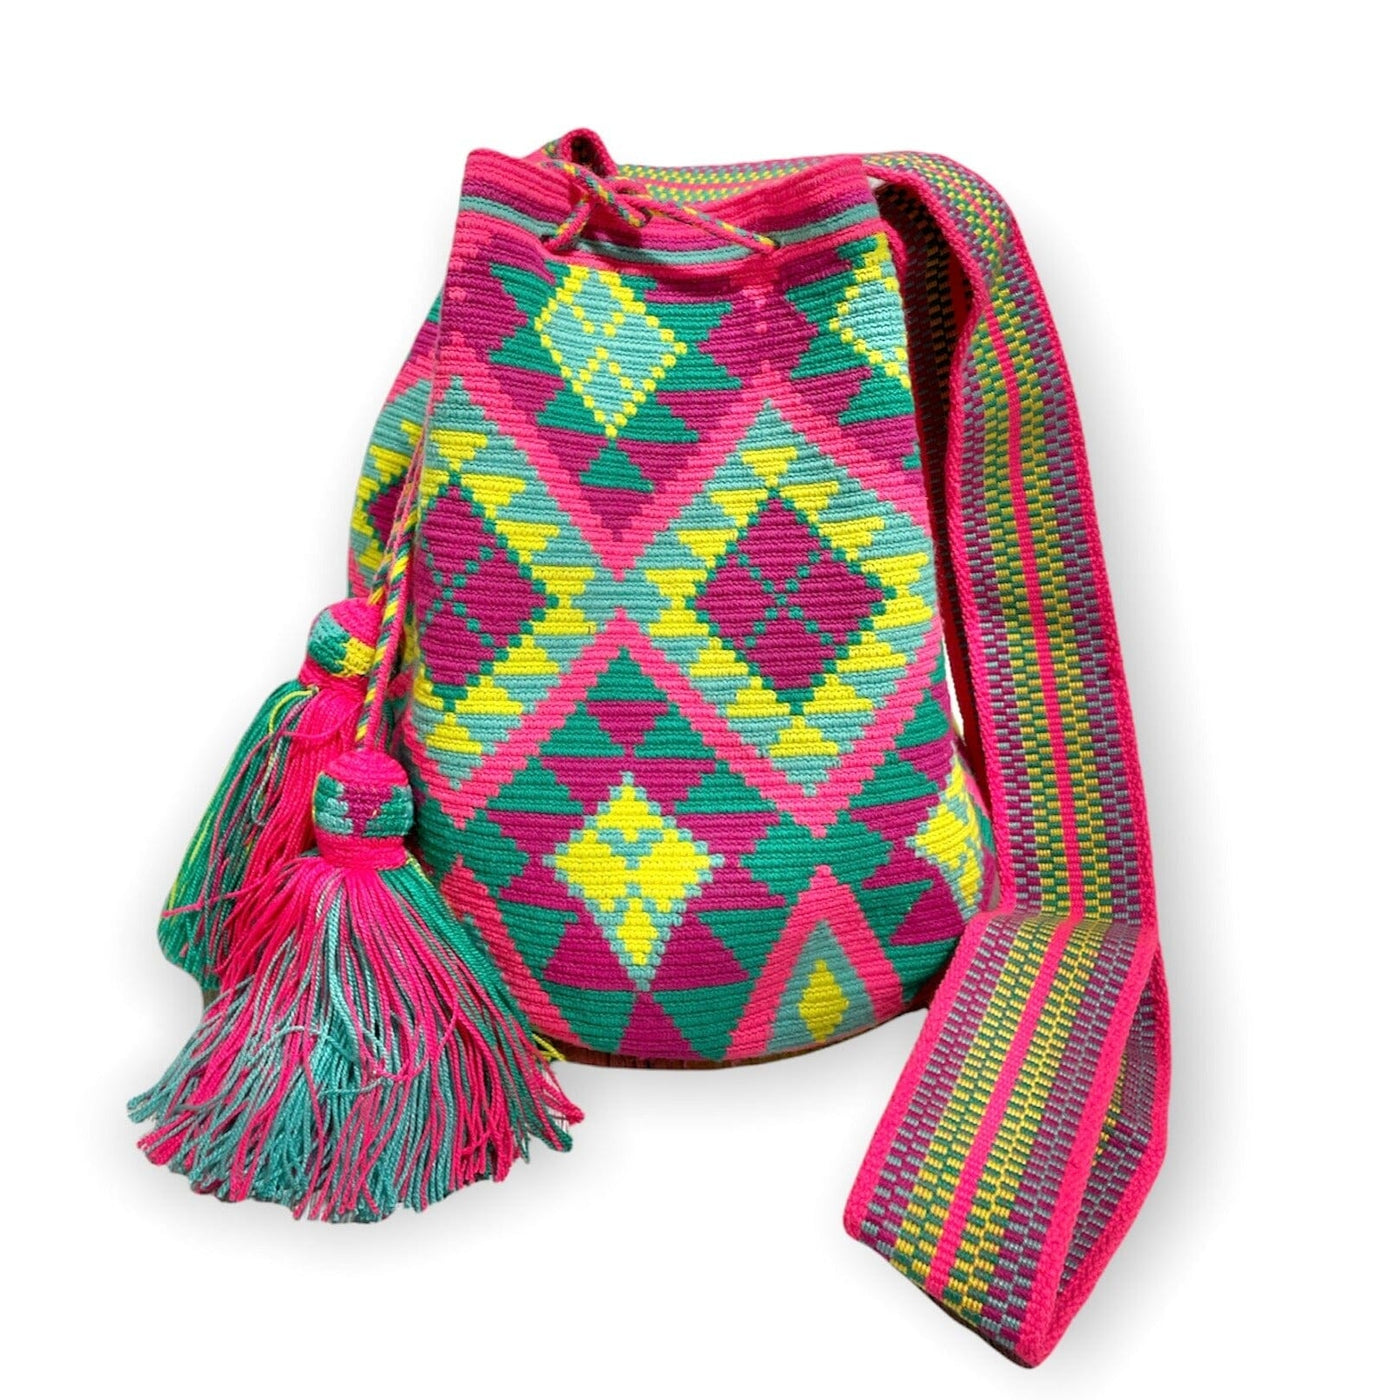 Tribal Pink Boho Beach Bags for Summer | Premium Crochet Bags | Colorful 4U